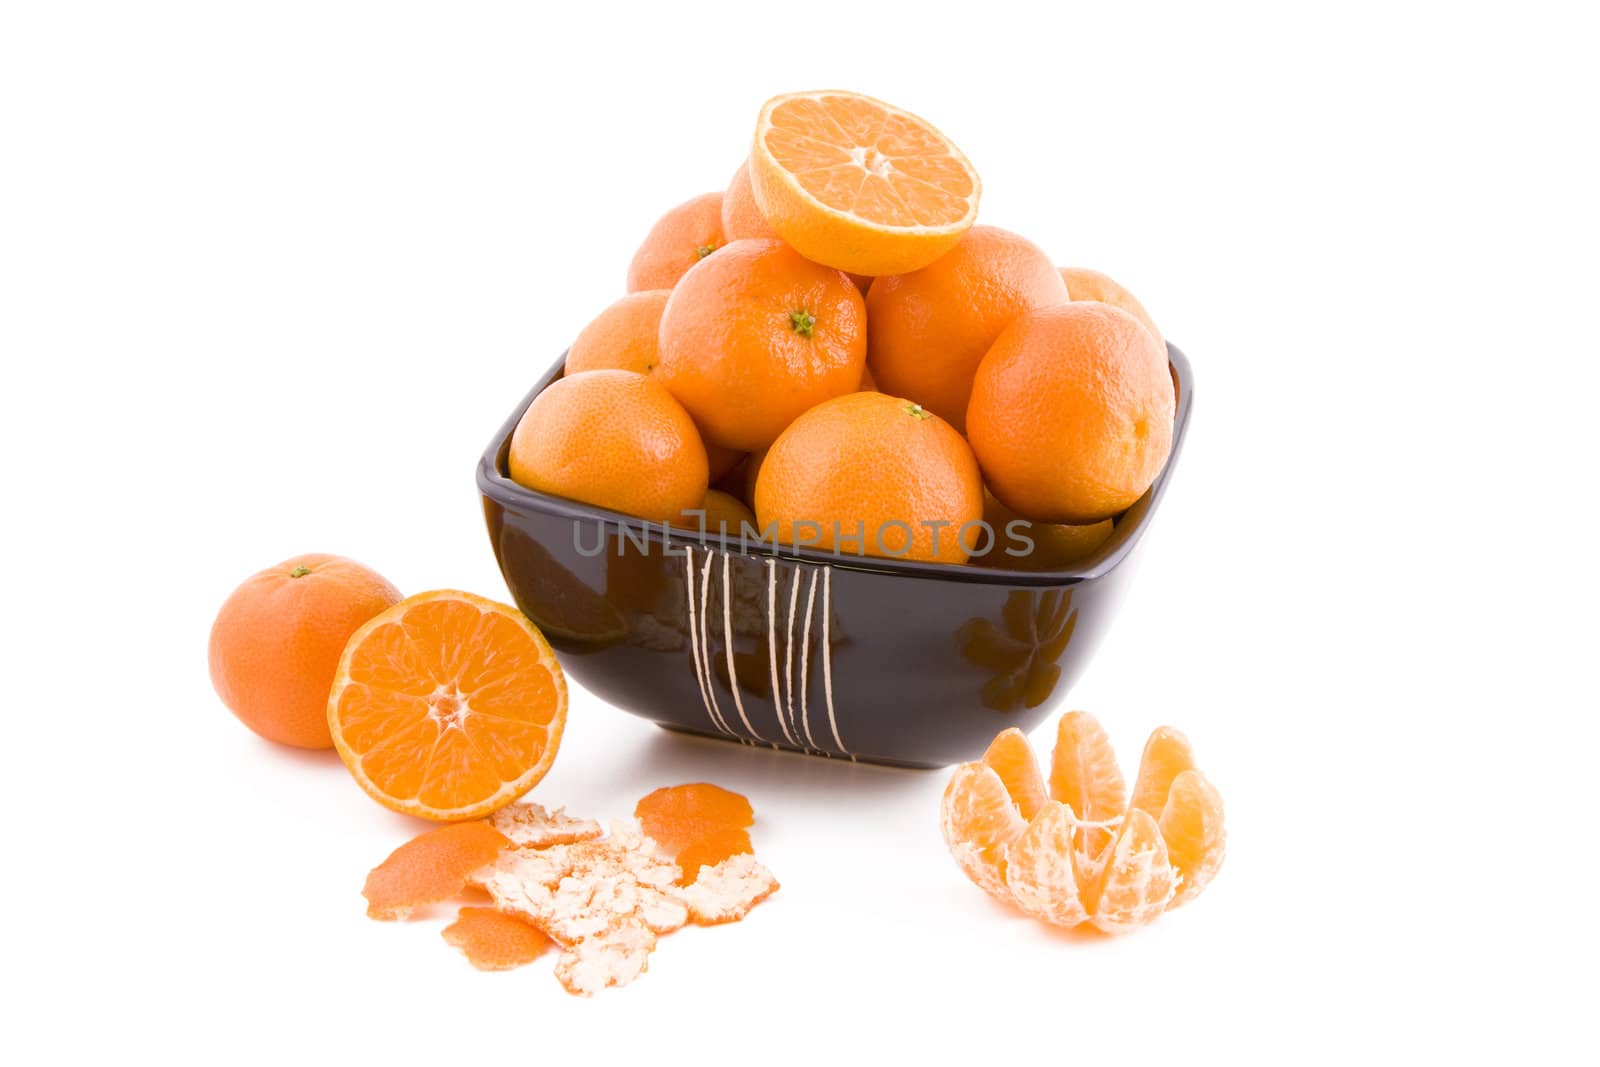 Tangerines in a bowl by Gbuglok